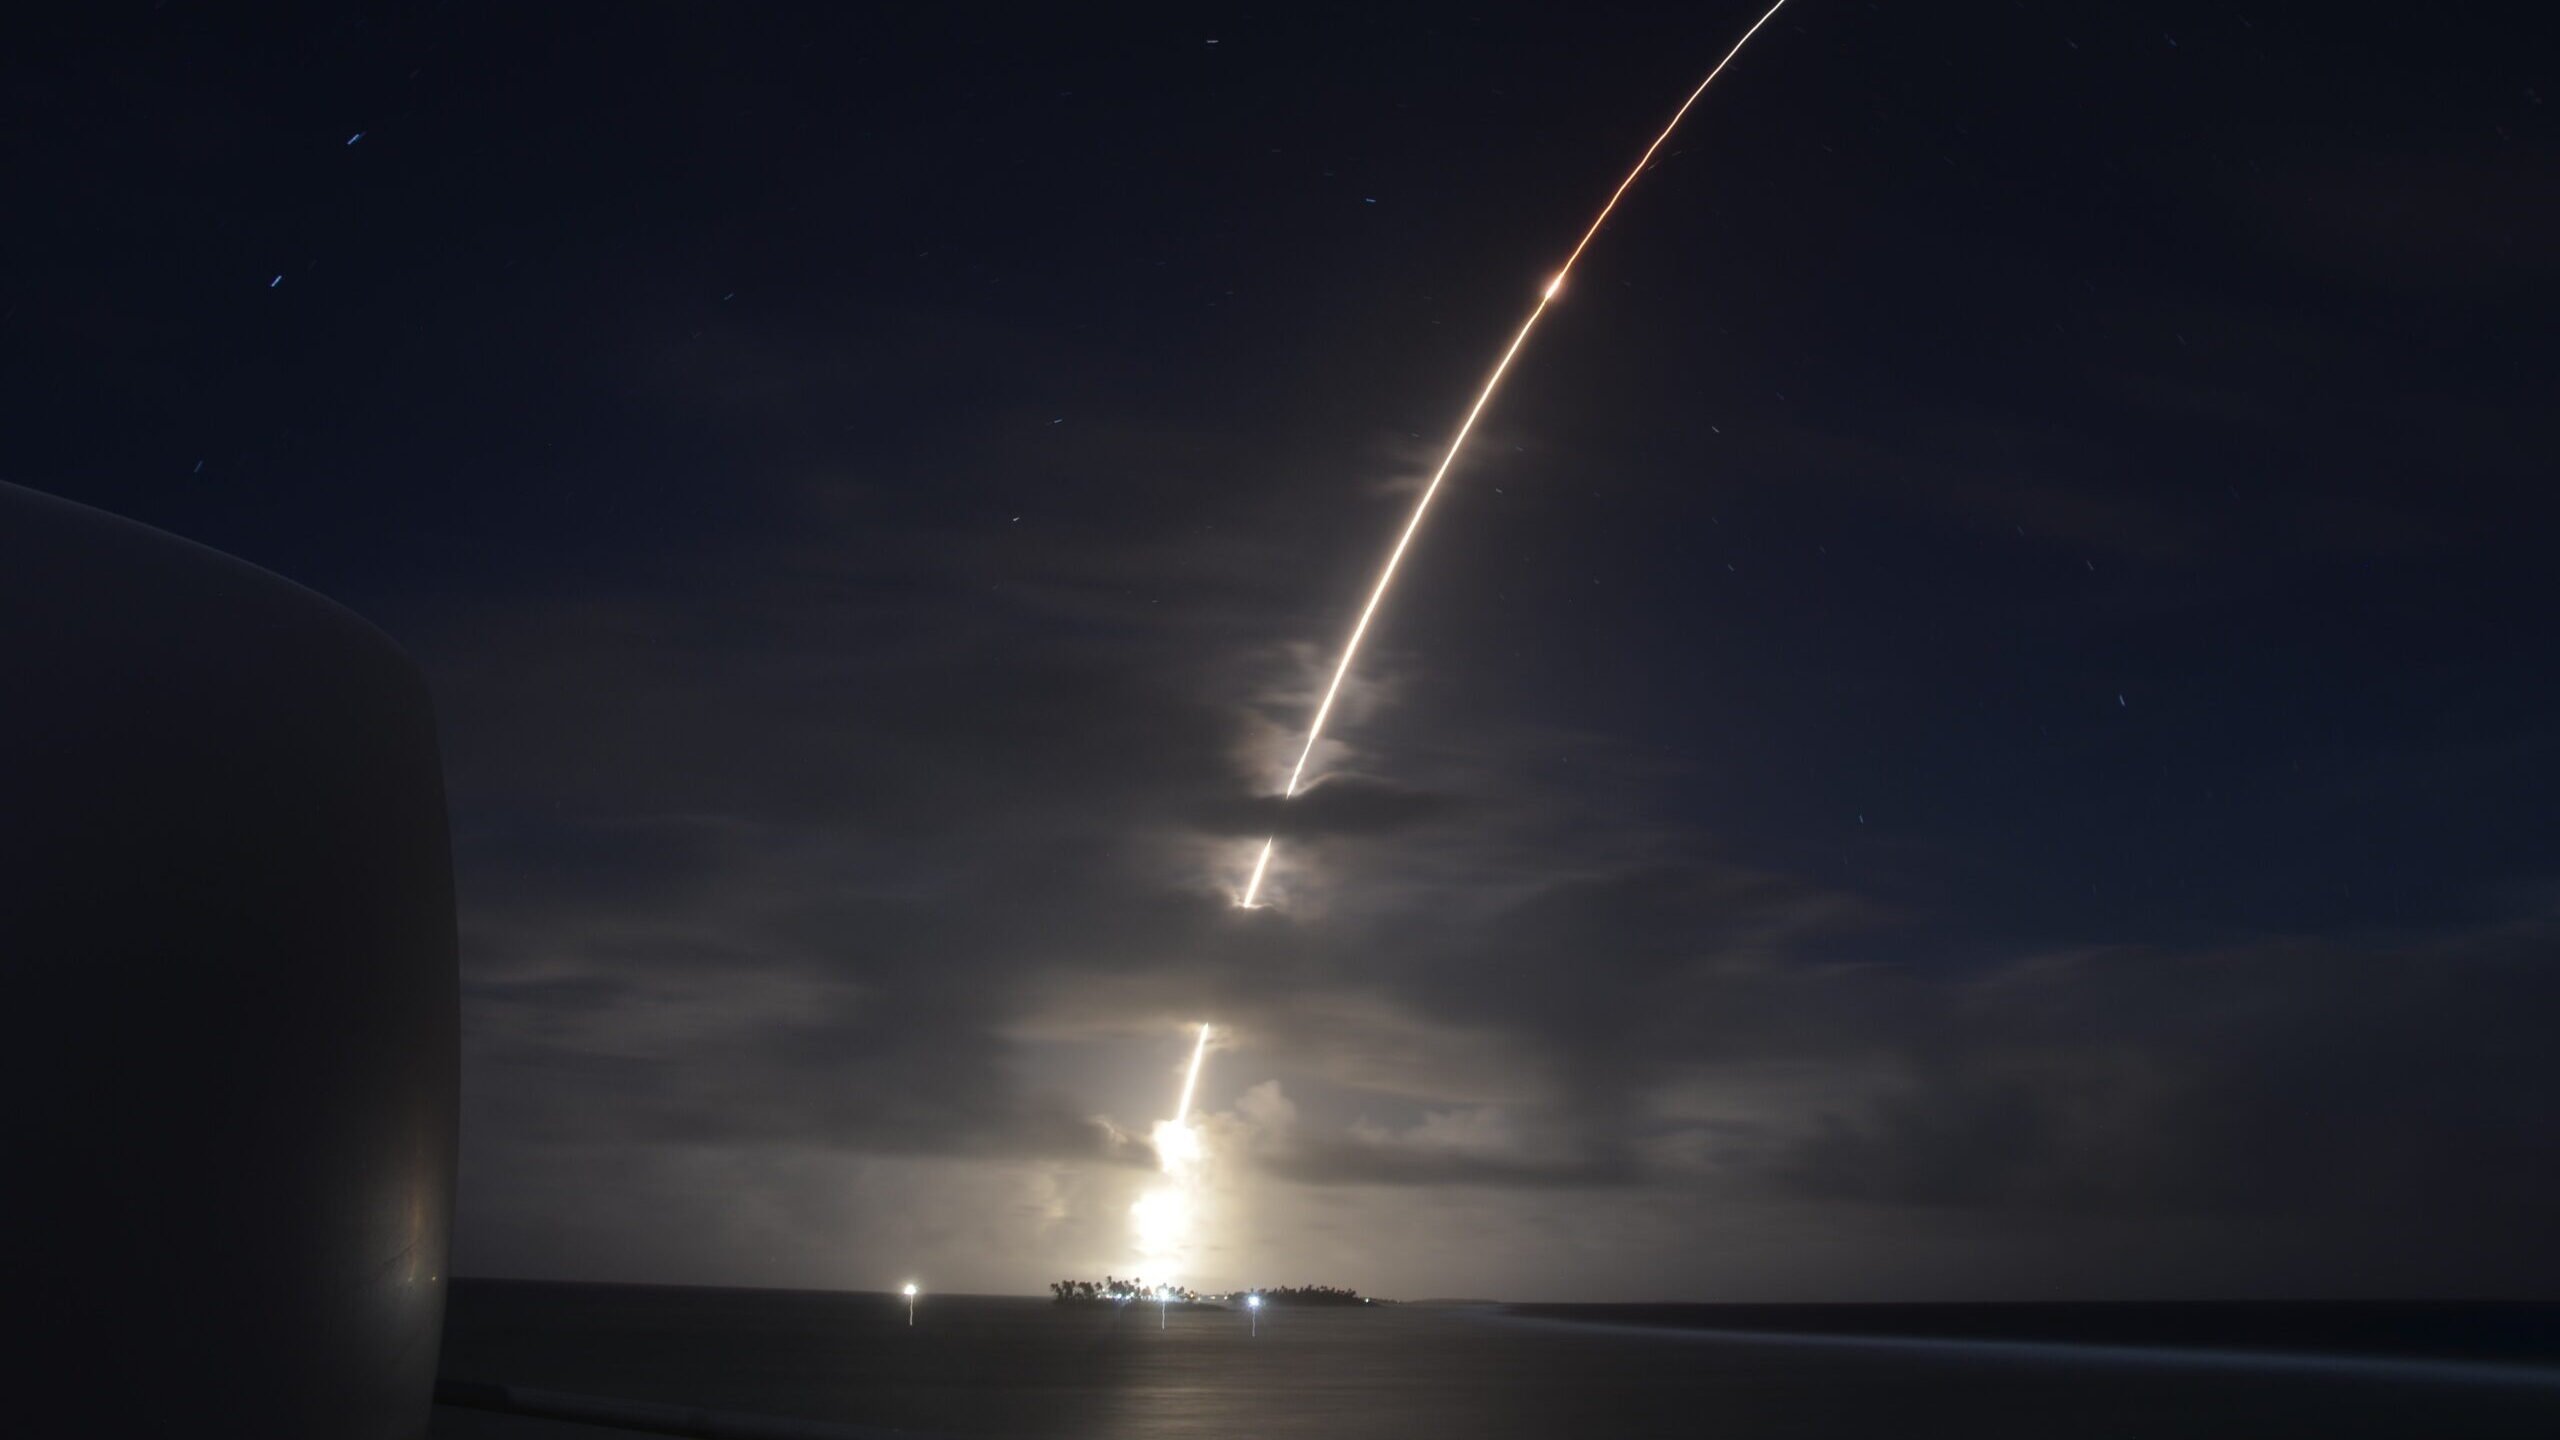 FTG-11 – target launch